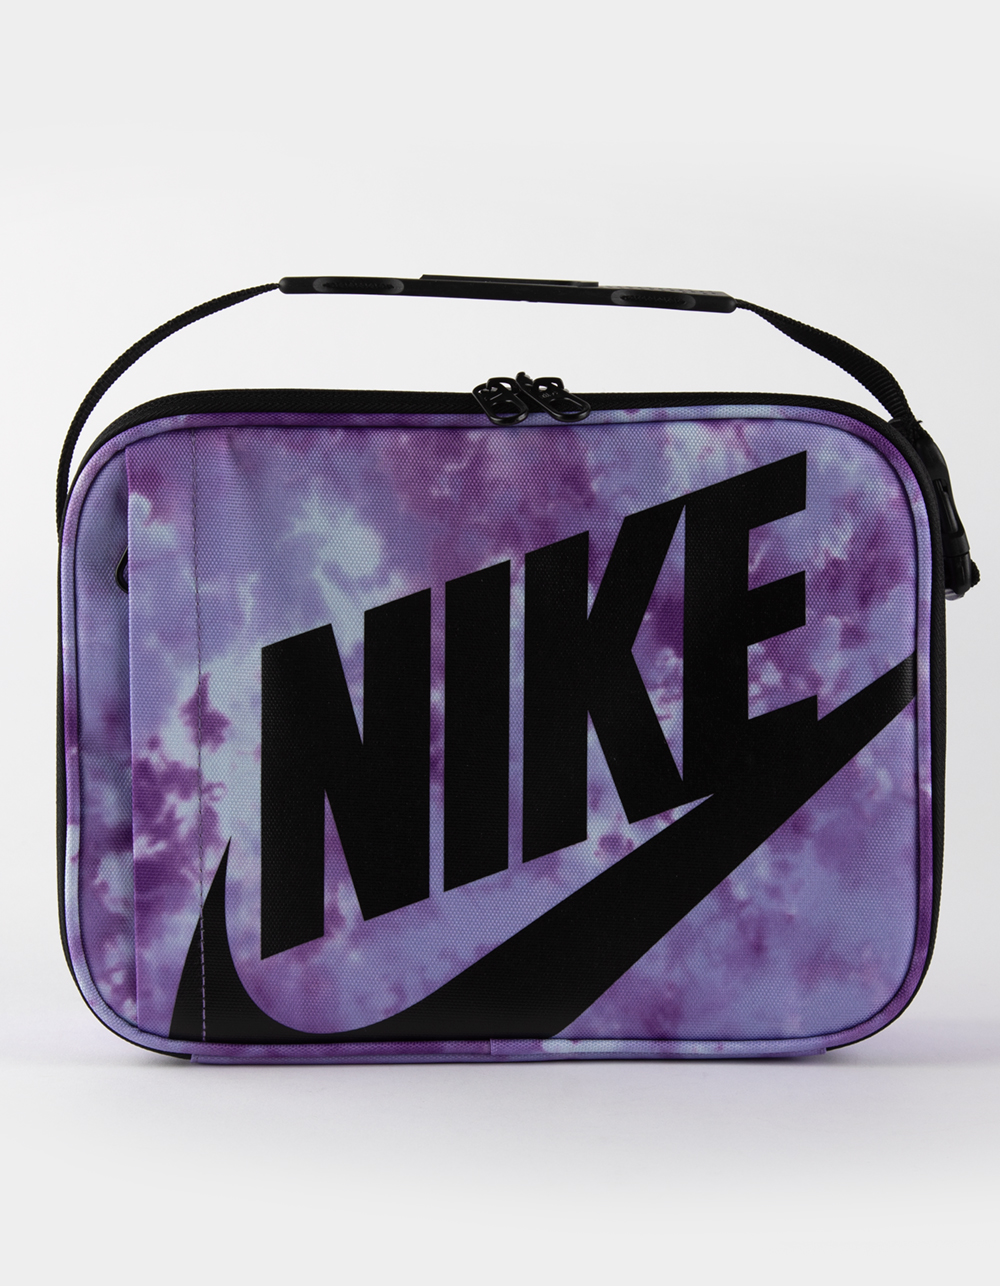 Nike Futura Fuel Tote Lunch Bag